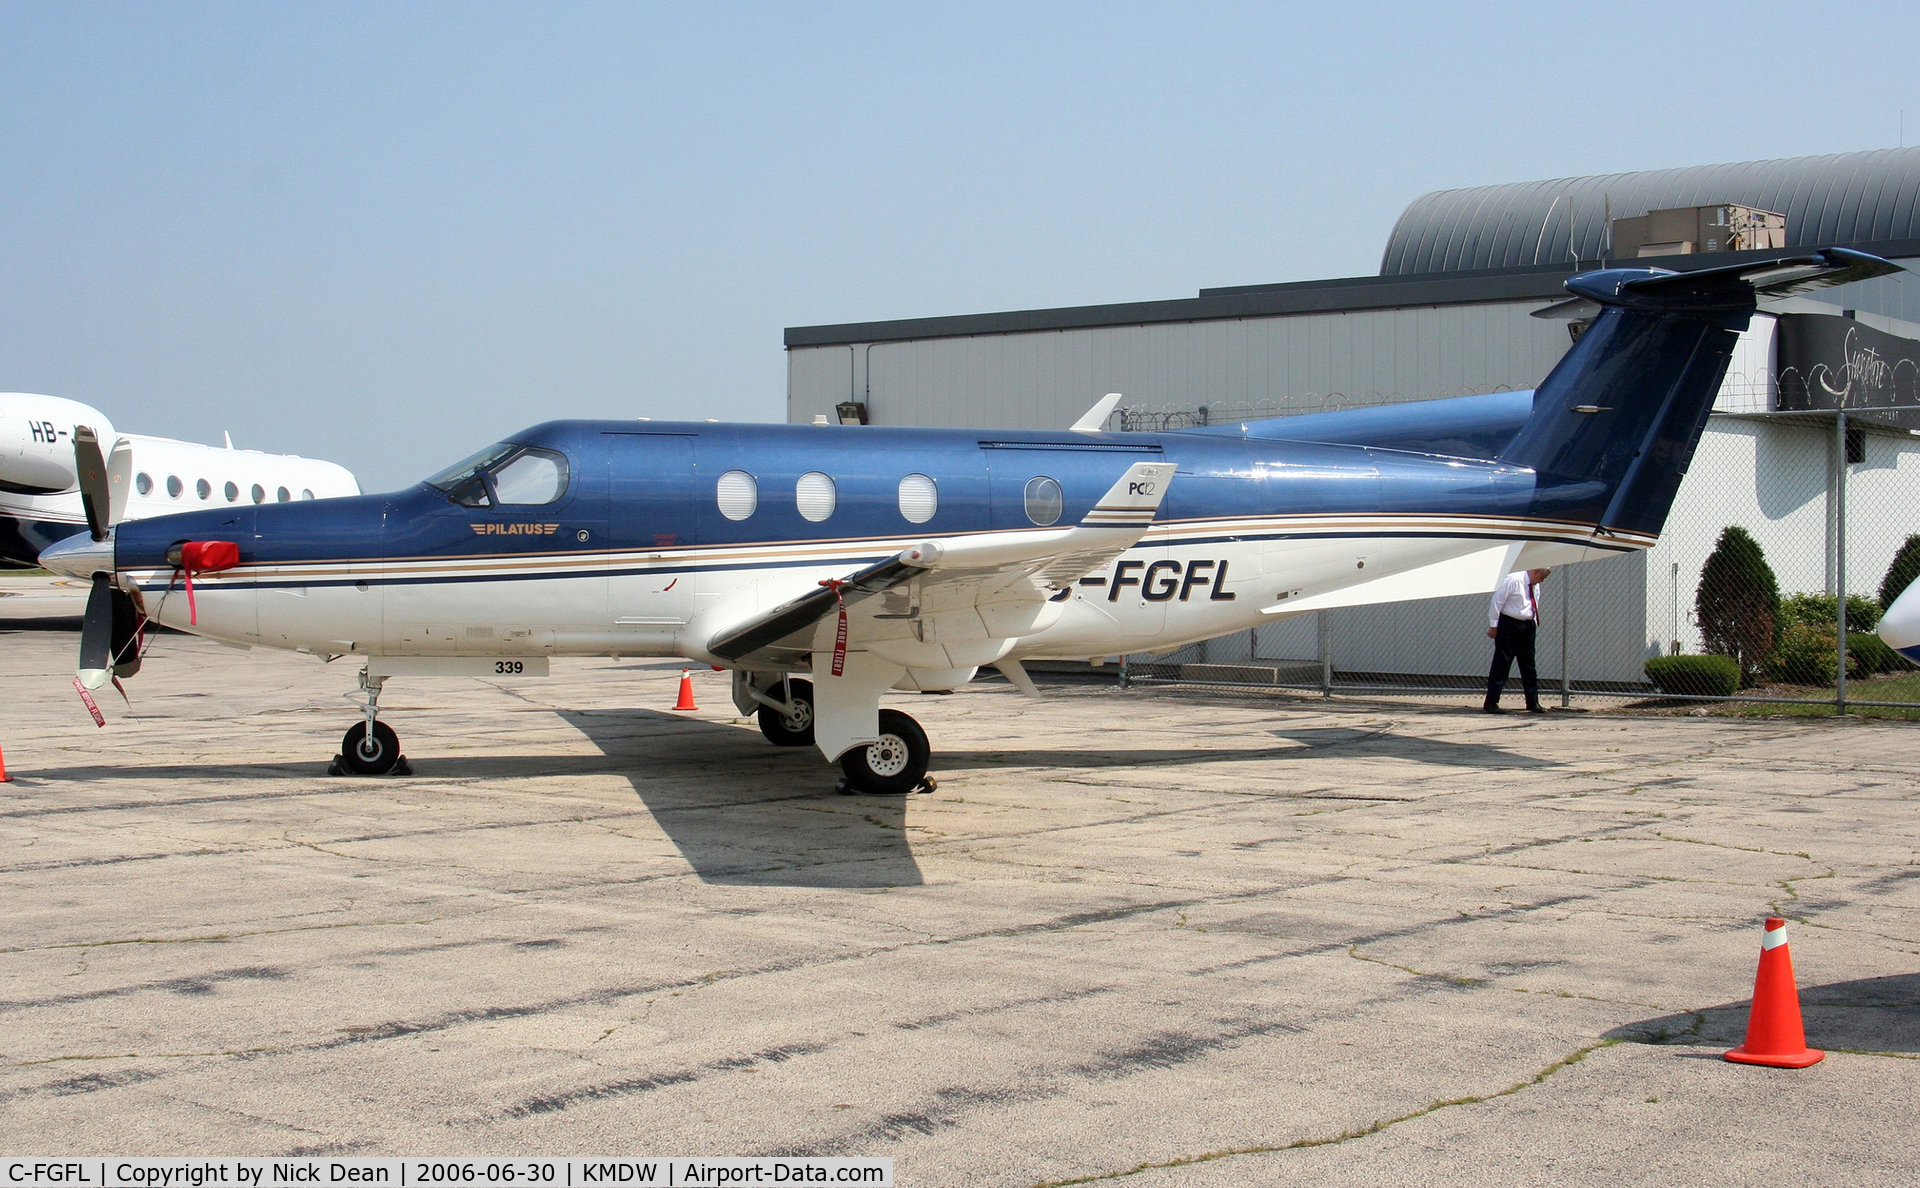 C-FGFL, 2000 Pilatus PC-12/45 C/N 339, KMDW